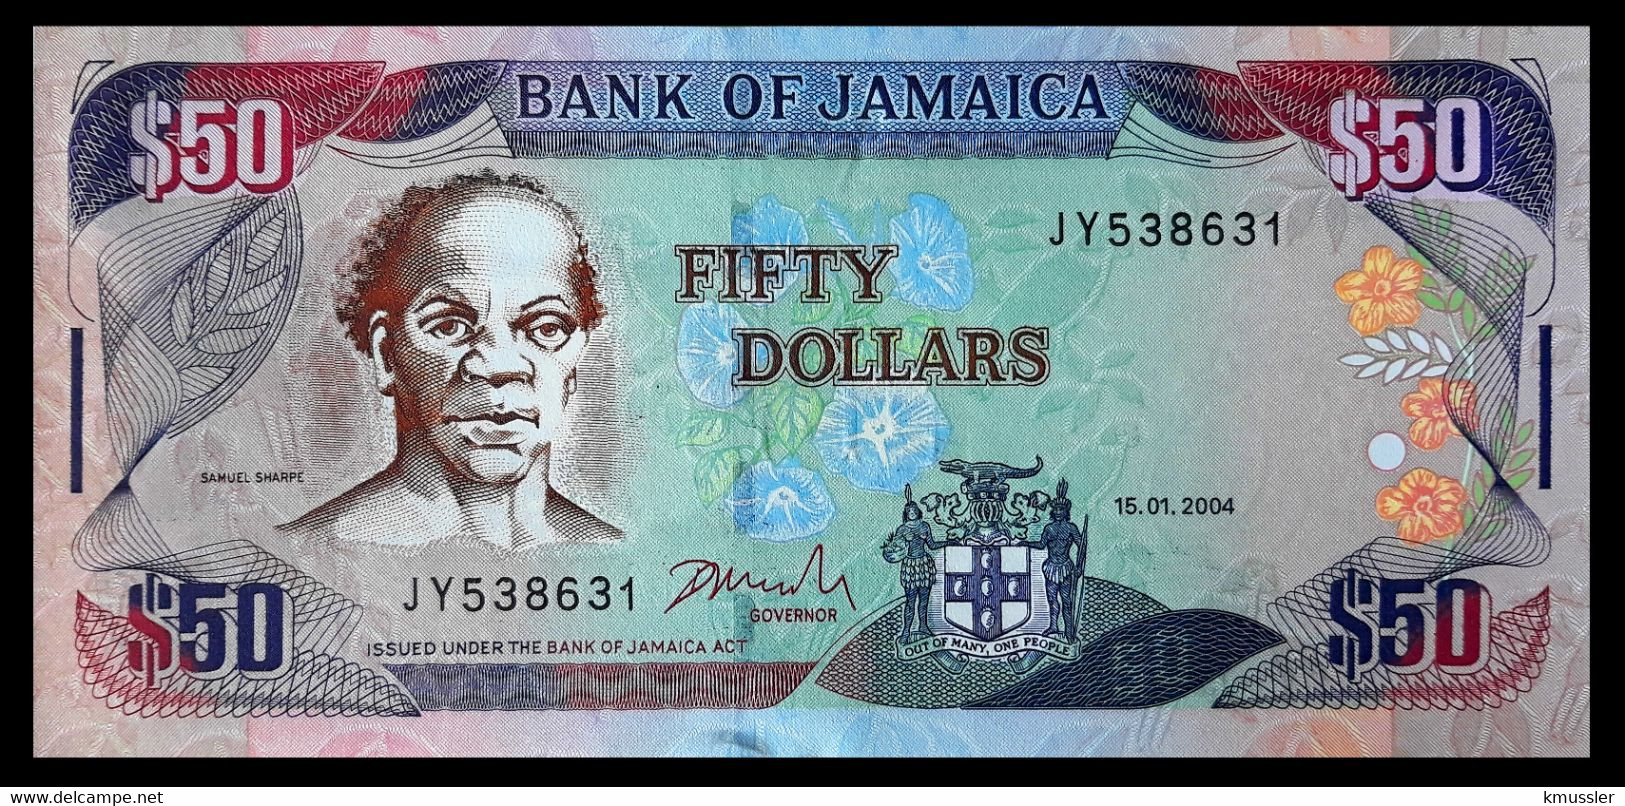 # # # Banknote Aus Jamaika (Jamaica) 50 Dollars 2004 UNC # # # - Jamaica